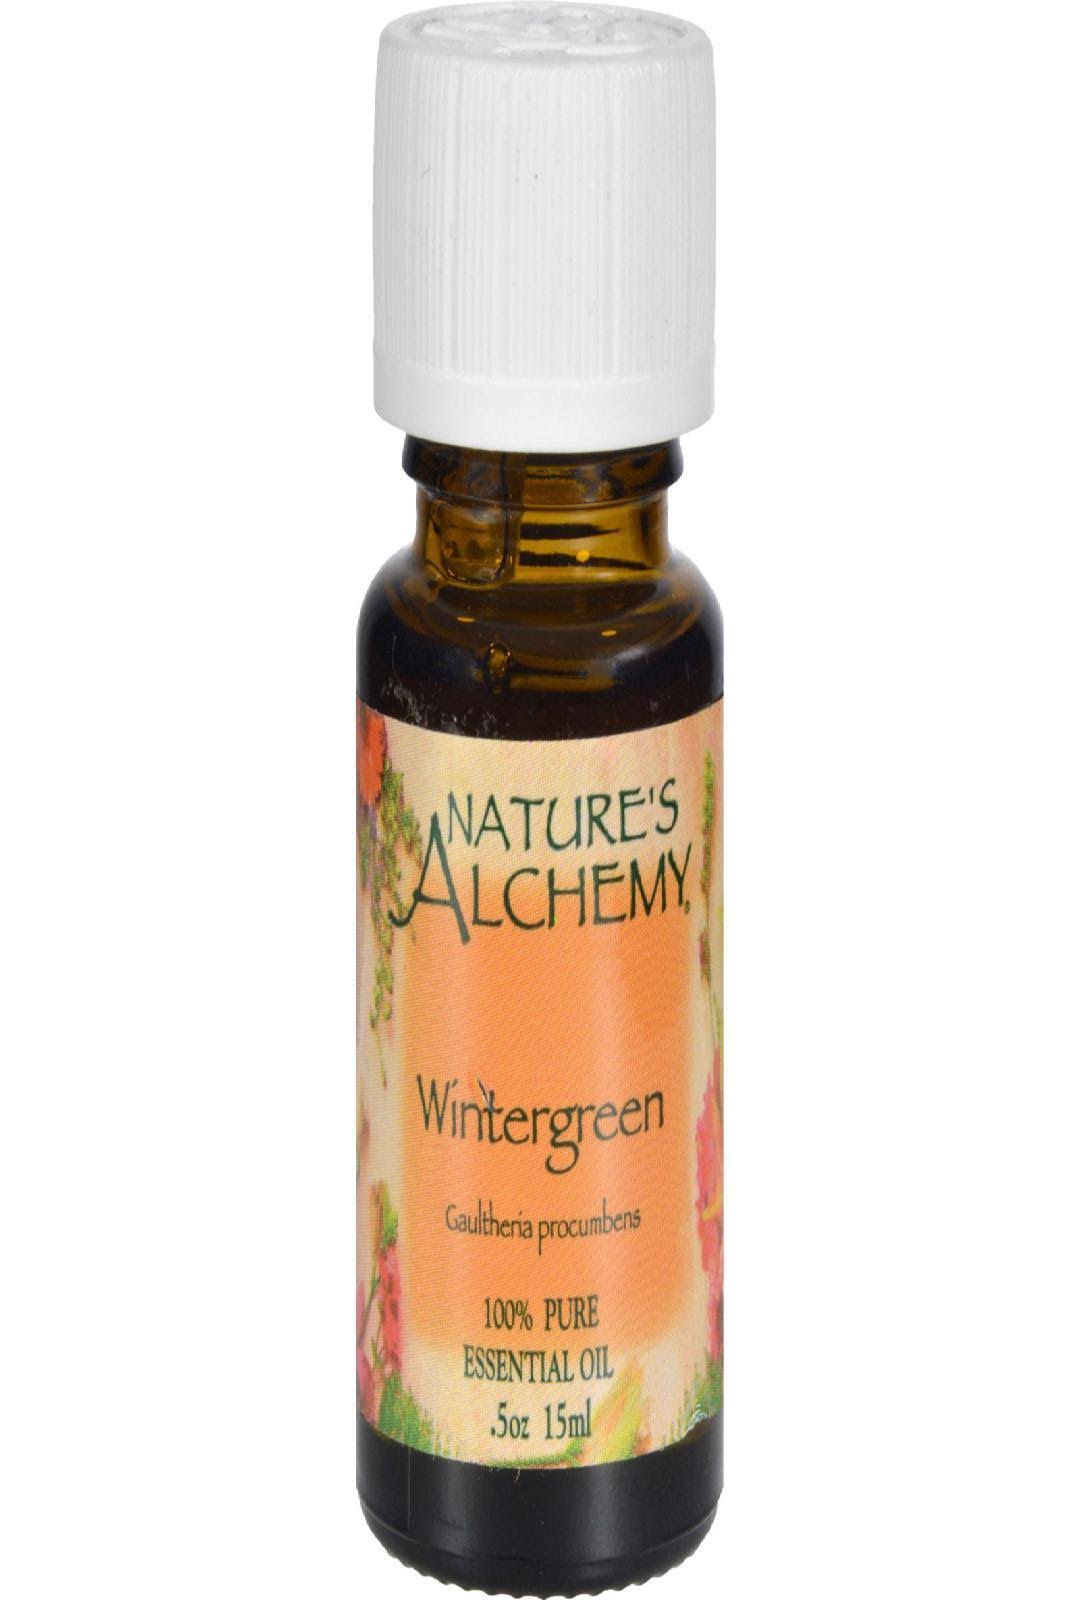 Nature's Alchemy 100 Percent Pure Essential Oil - Wintergreen, 0.5oz